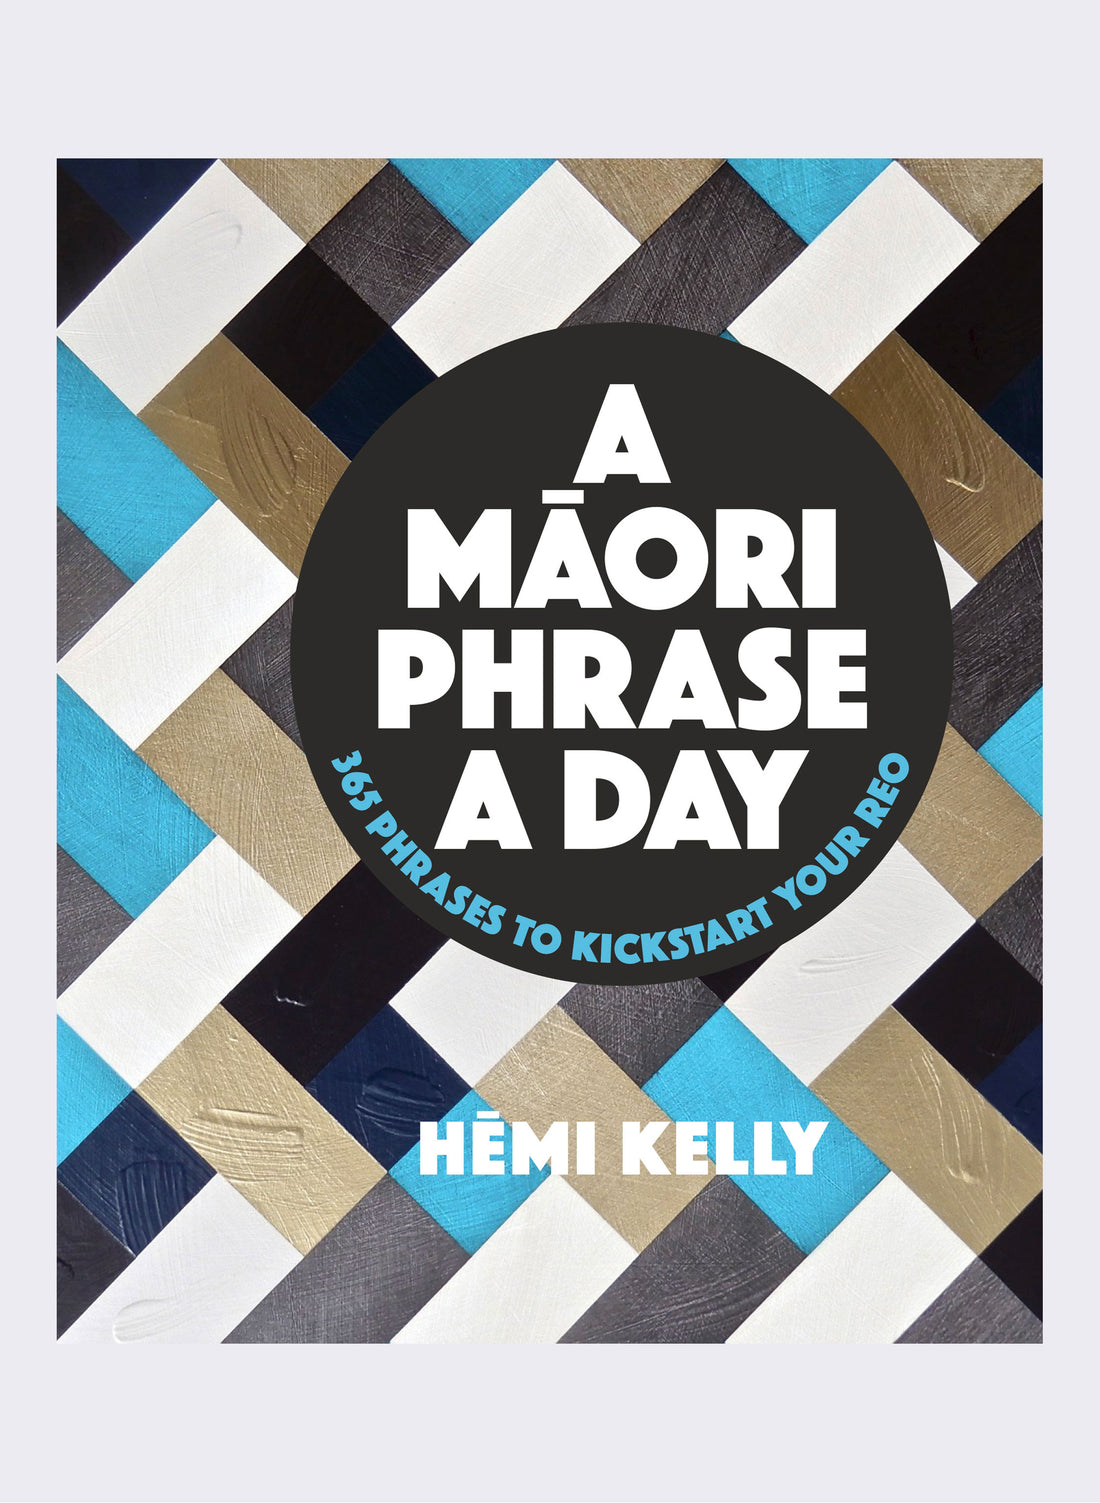 A Maori Phrase a Day by Hemi Kelly